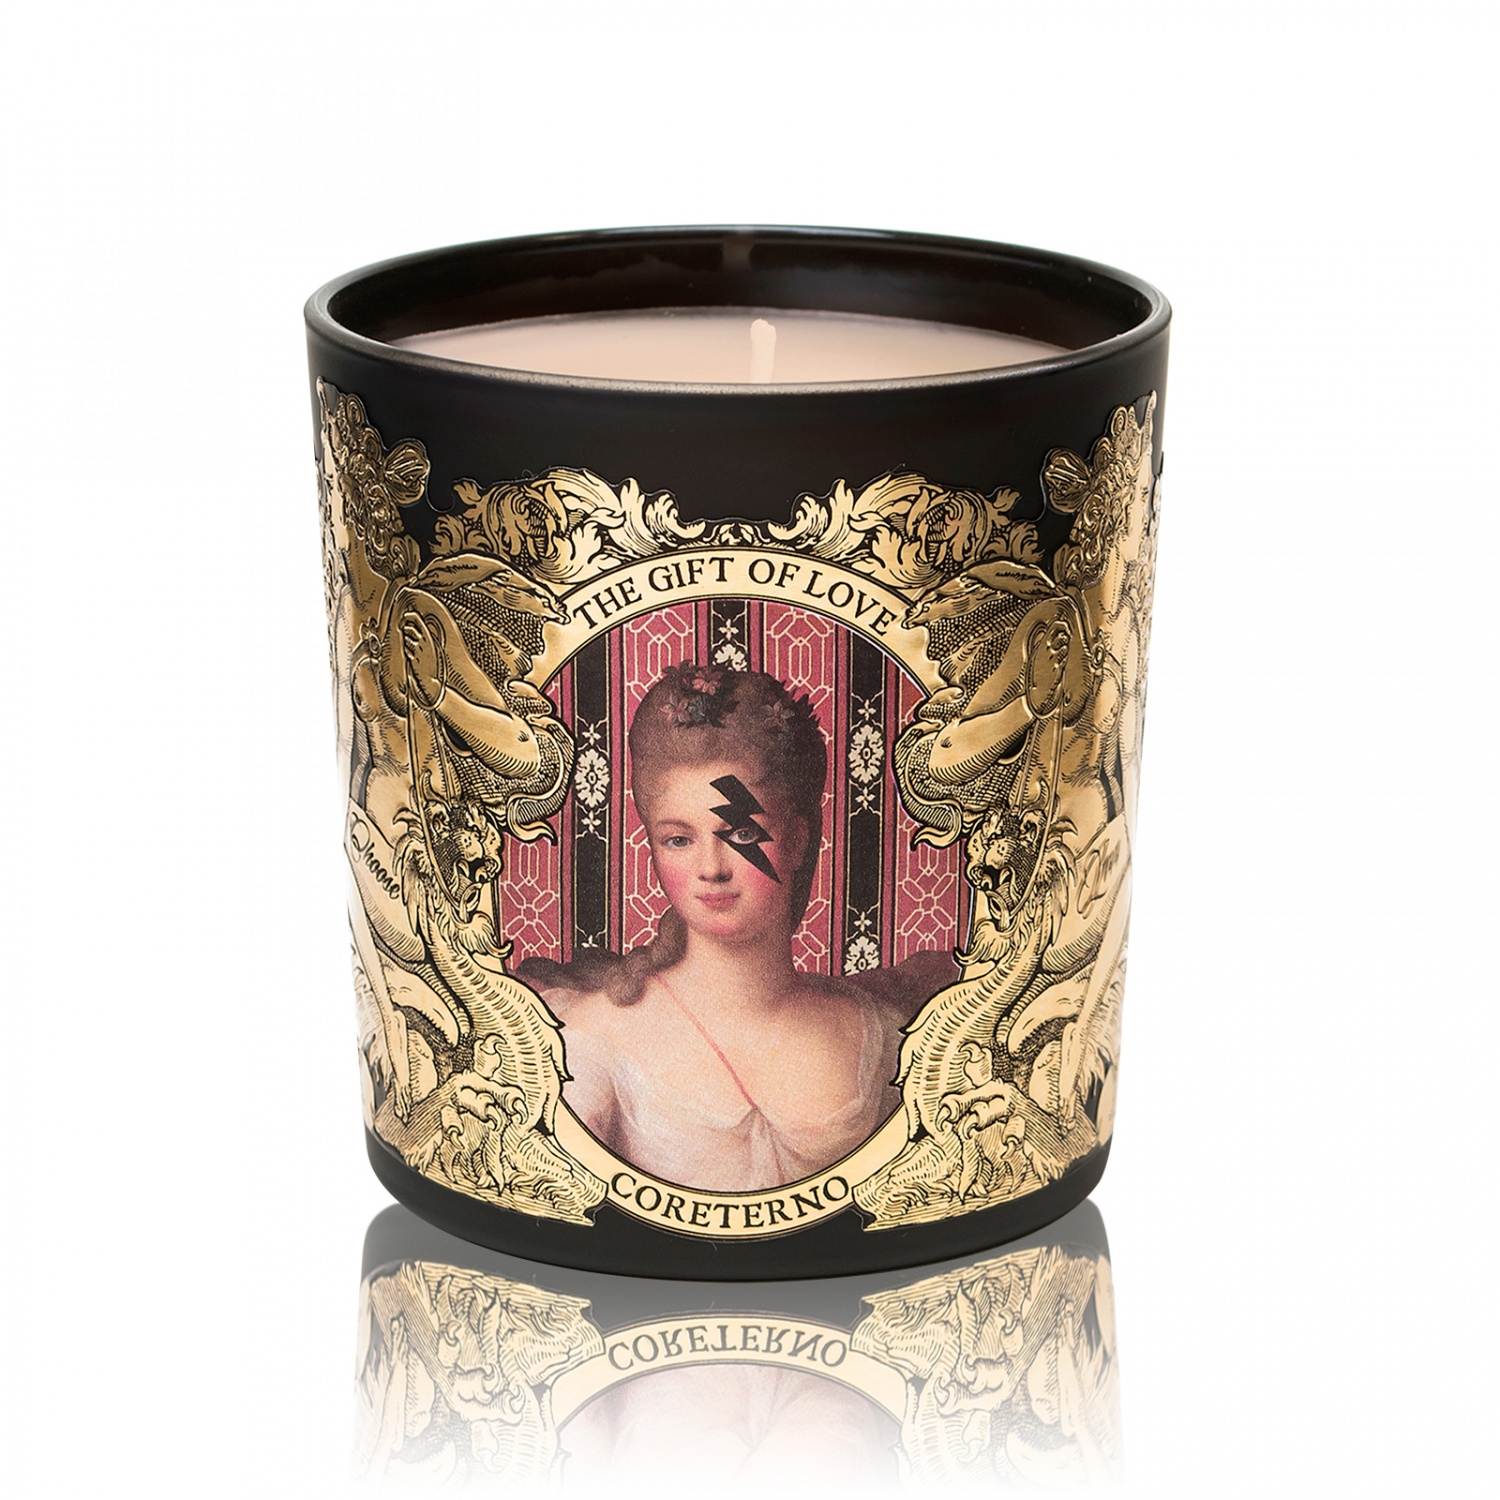 CORETERNO The Gift Of Love - Flowery Coffee Scented Candle 240g - интернет-магазин профессиональной косметики Spadream, изображение 43759